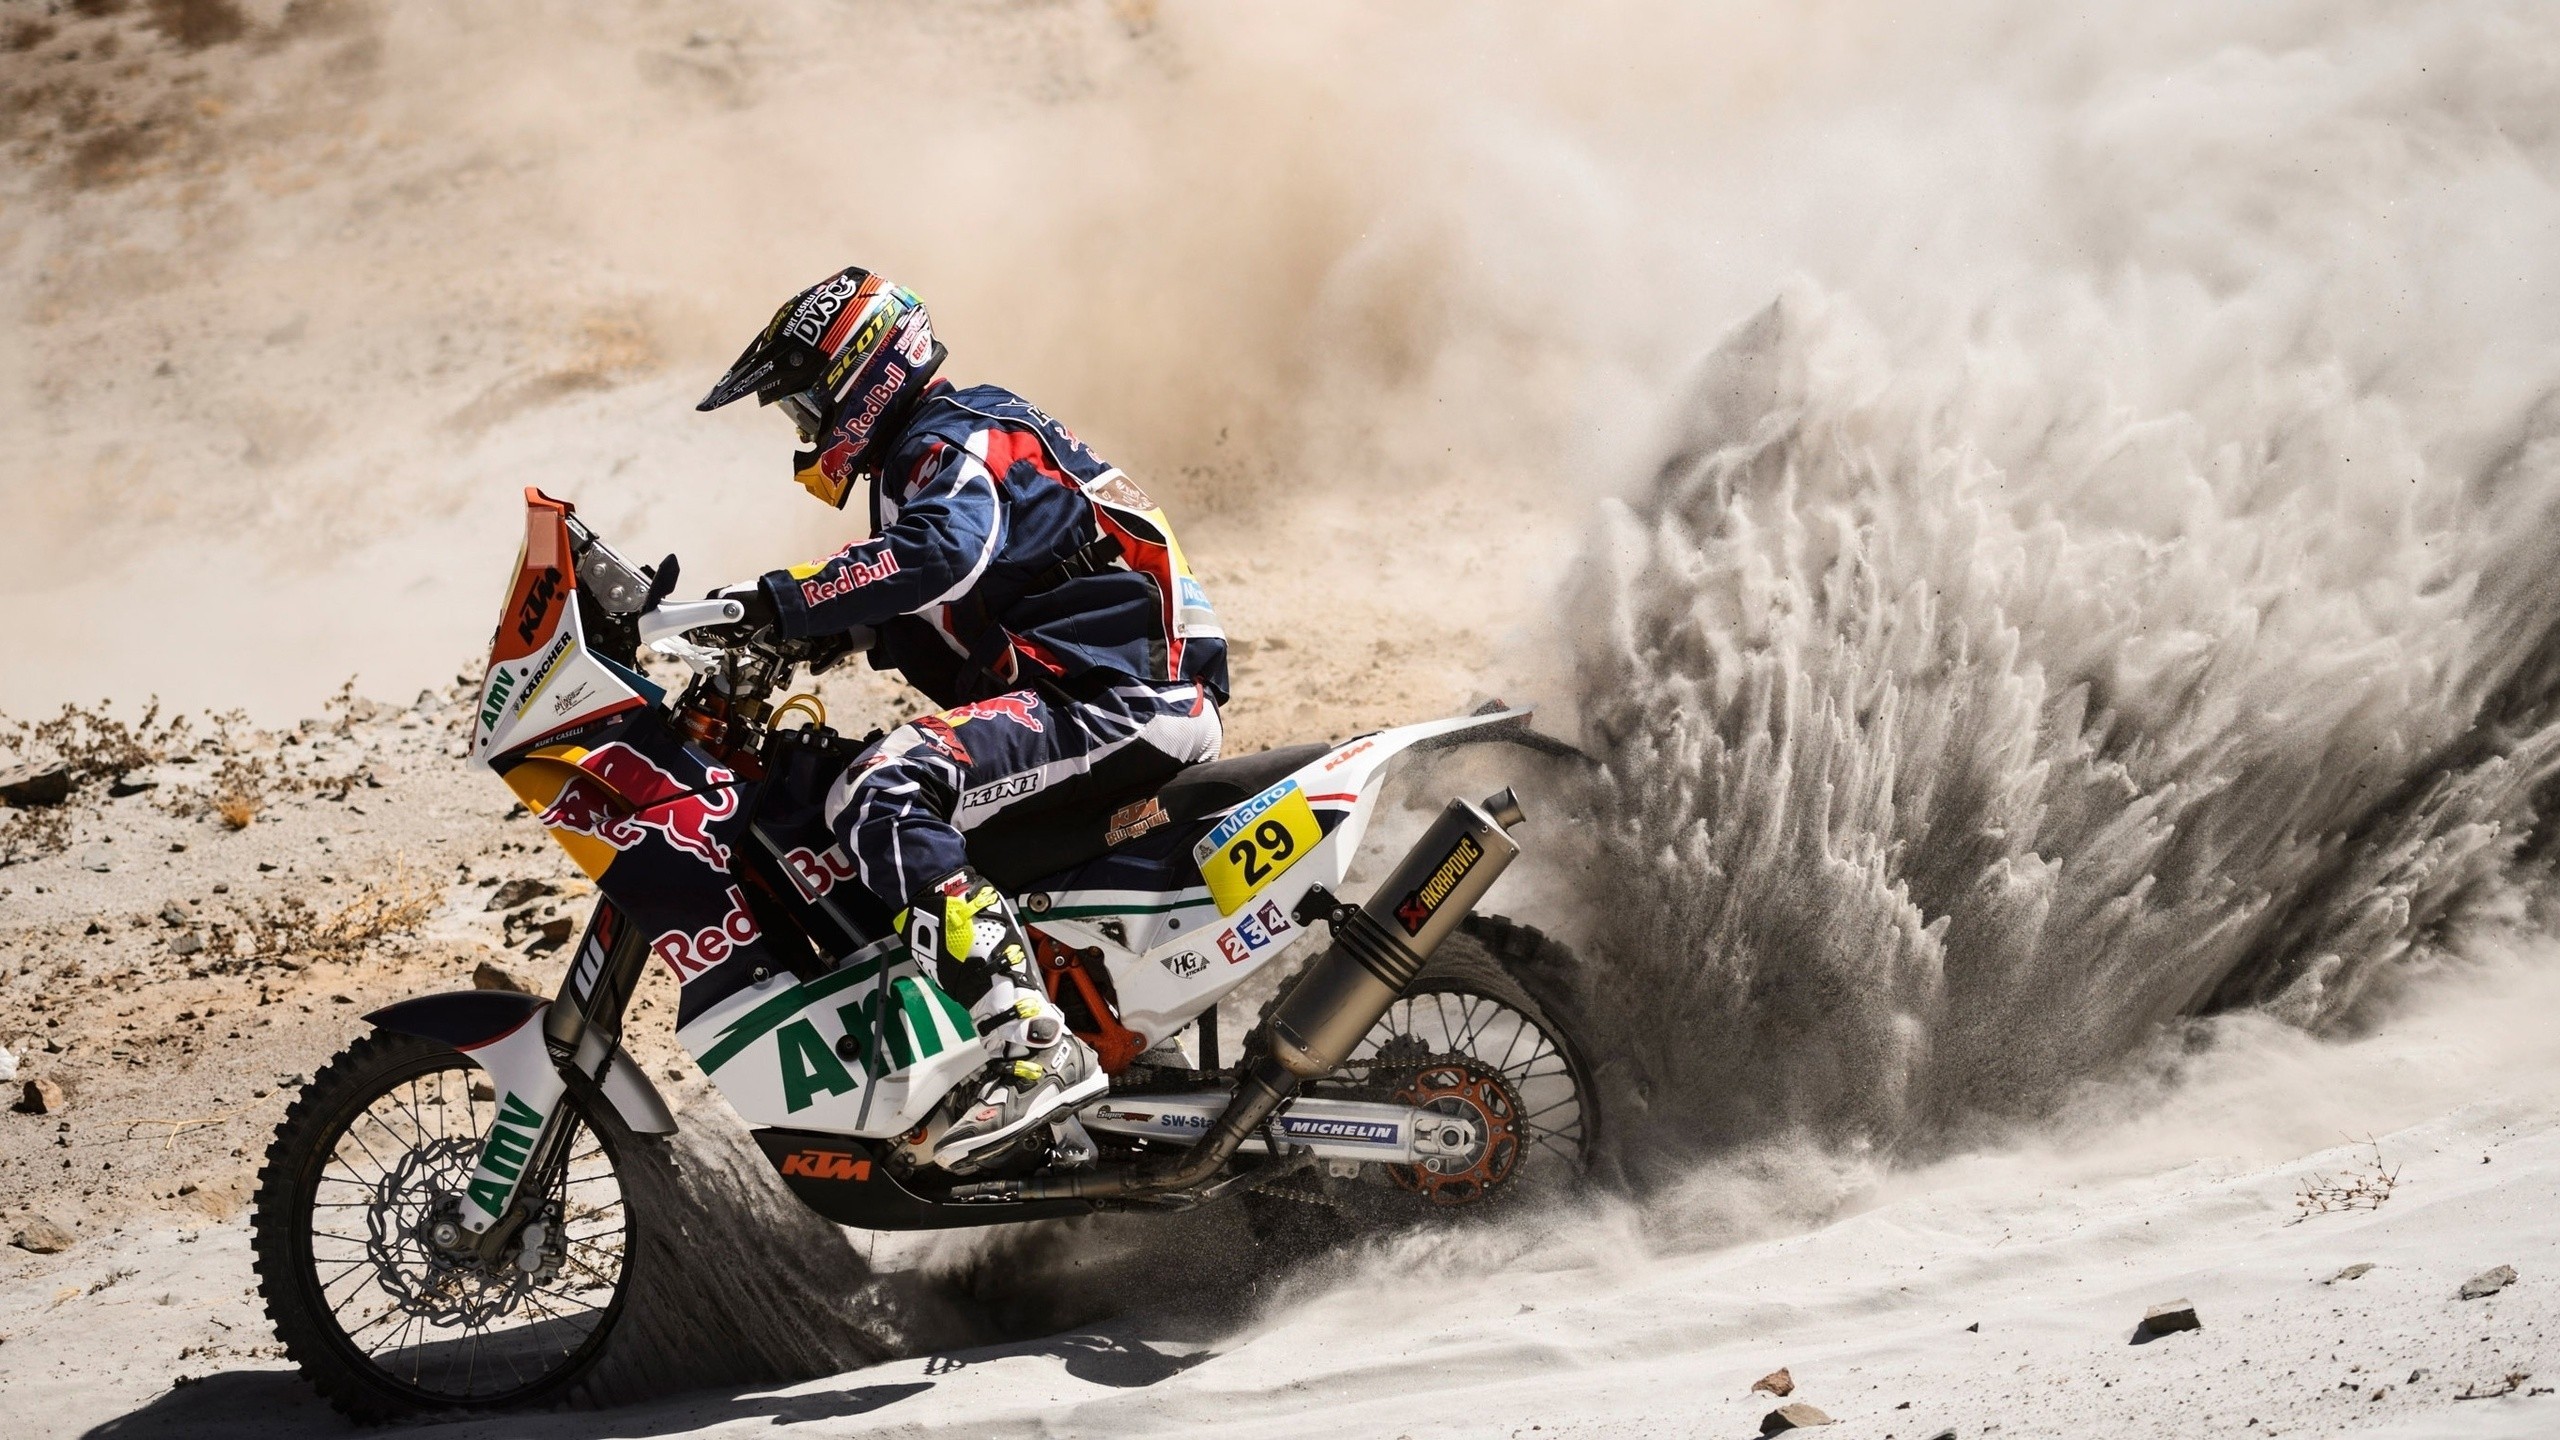 2560x1440 #KTM, #motorcycle, #Red Bull, #Dakar, #Paris Dakar wallpaper